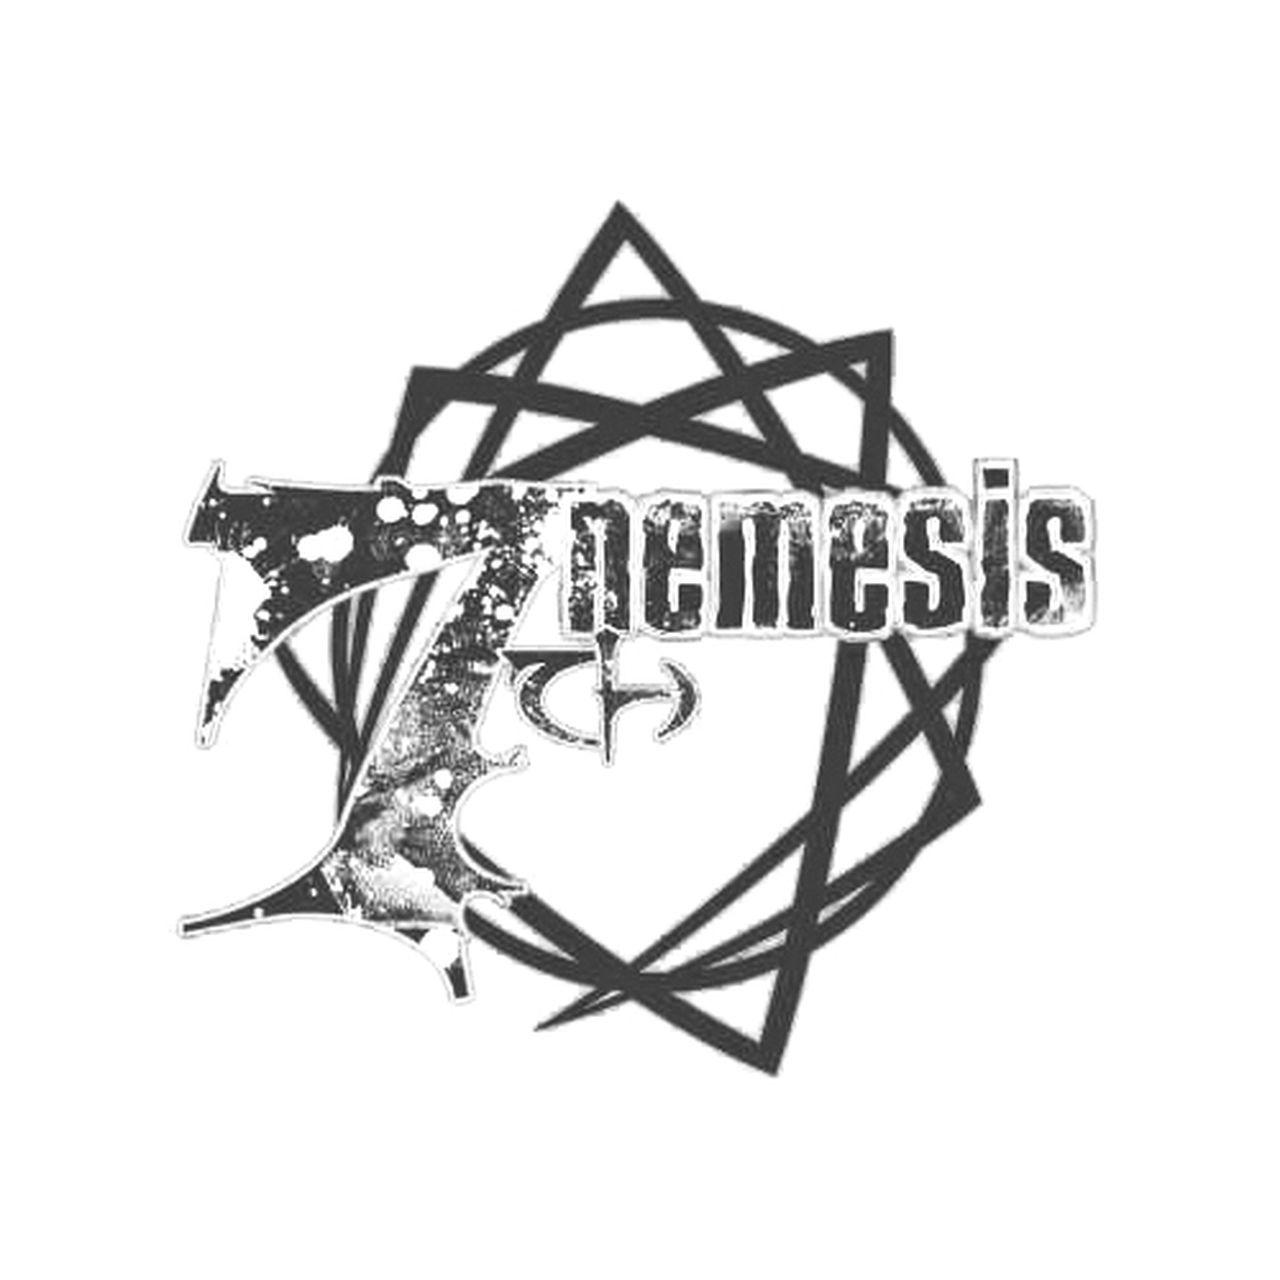 Nemesis Logo - 7th Nemesis Band Logo Decal